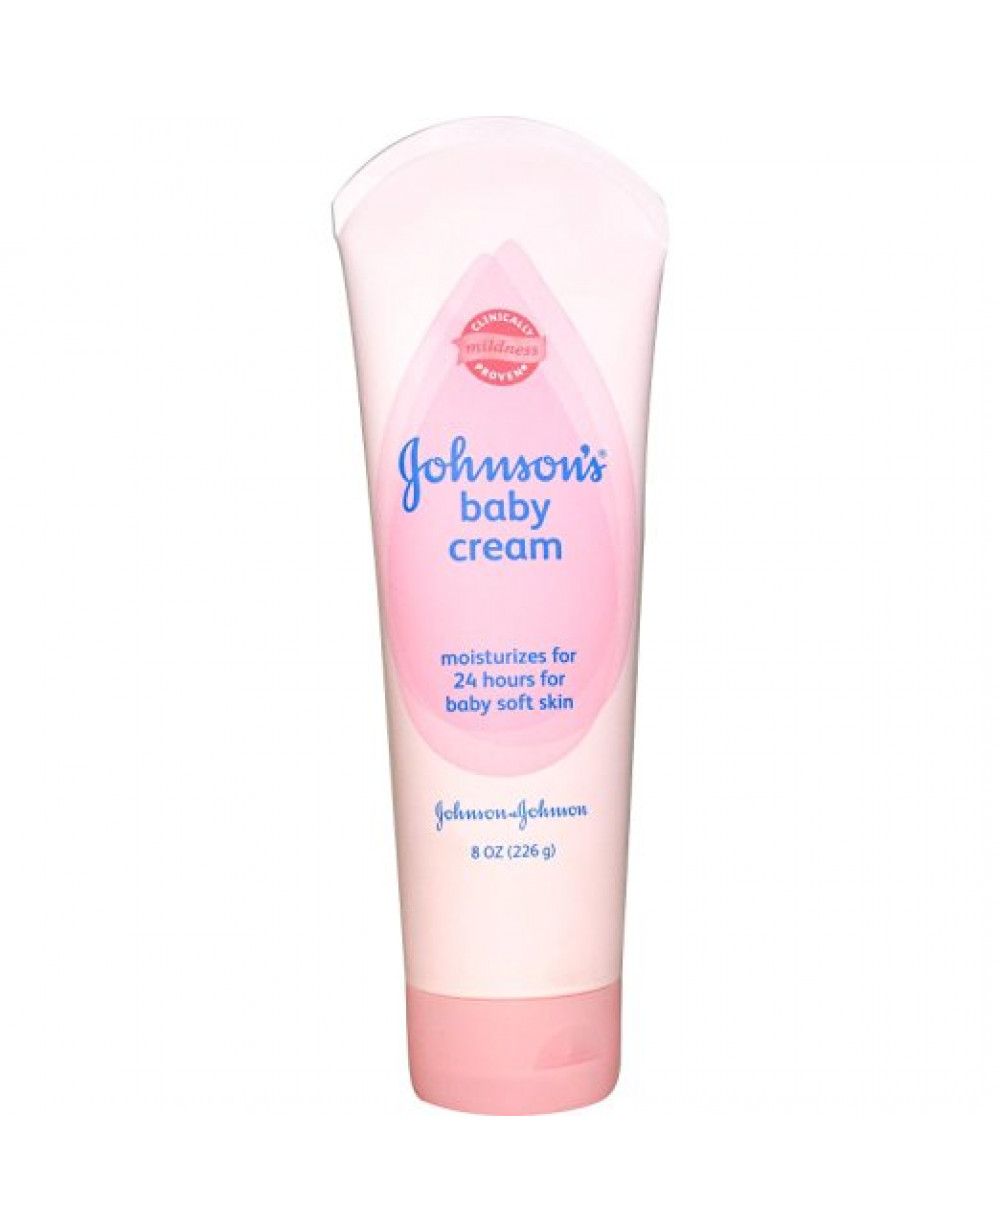 johnson and johnson baby moisturising cream